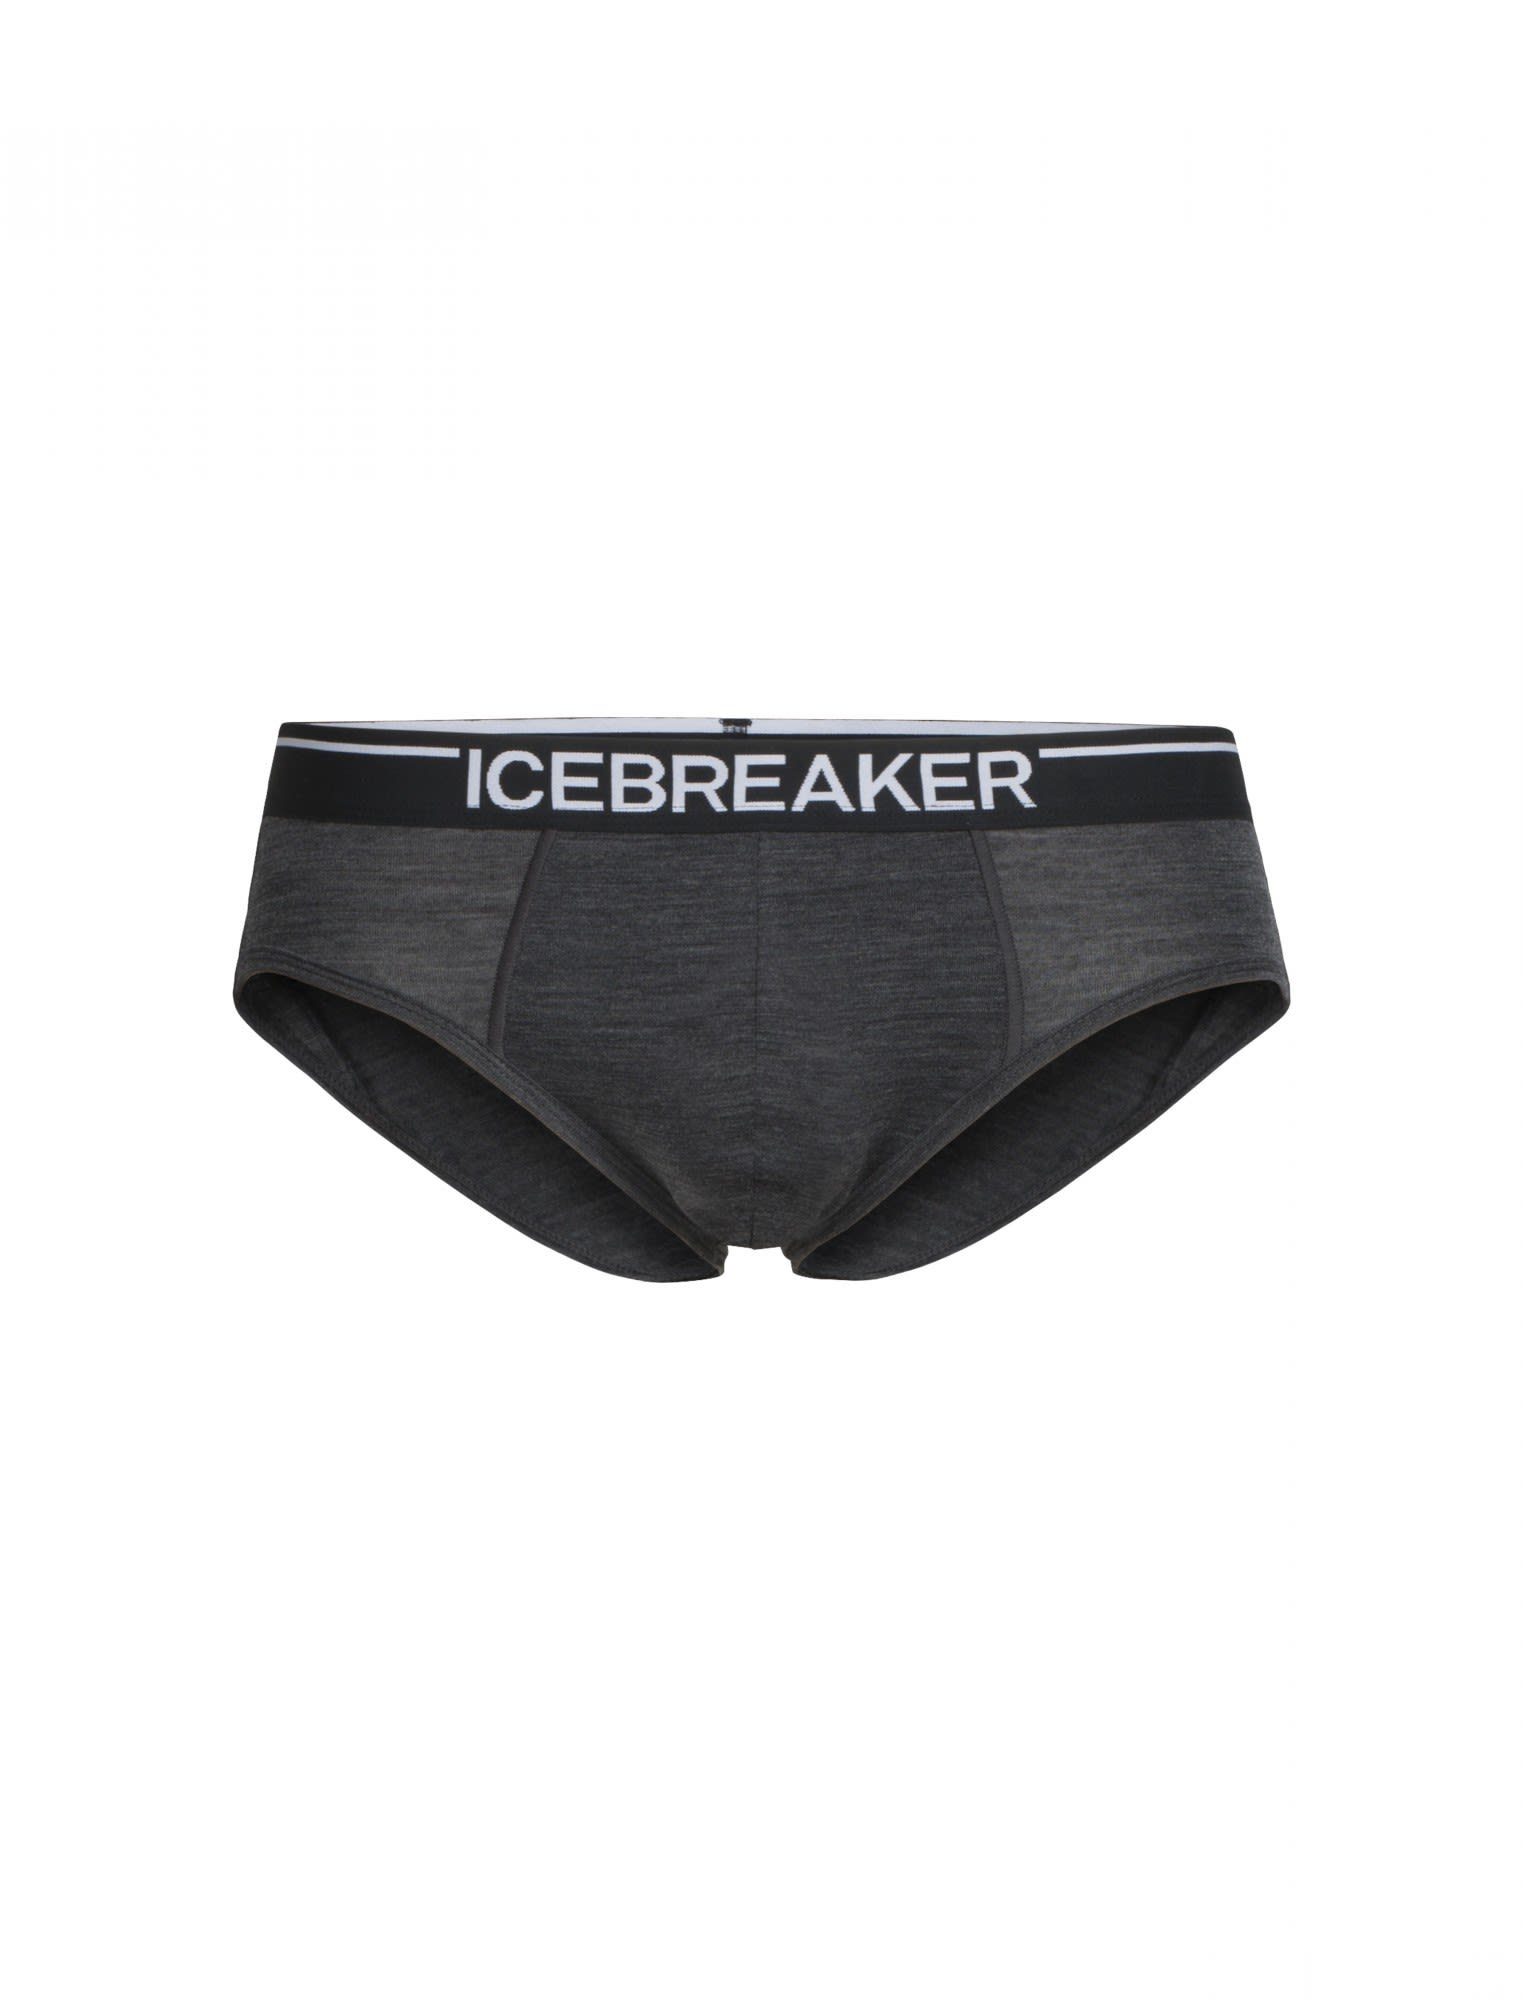 Icebreaker Lange Unterhose Icebreaker M HTHR Herren Grey Briefs Anatomica Kurze